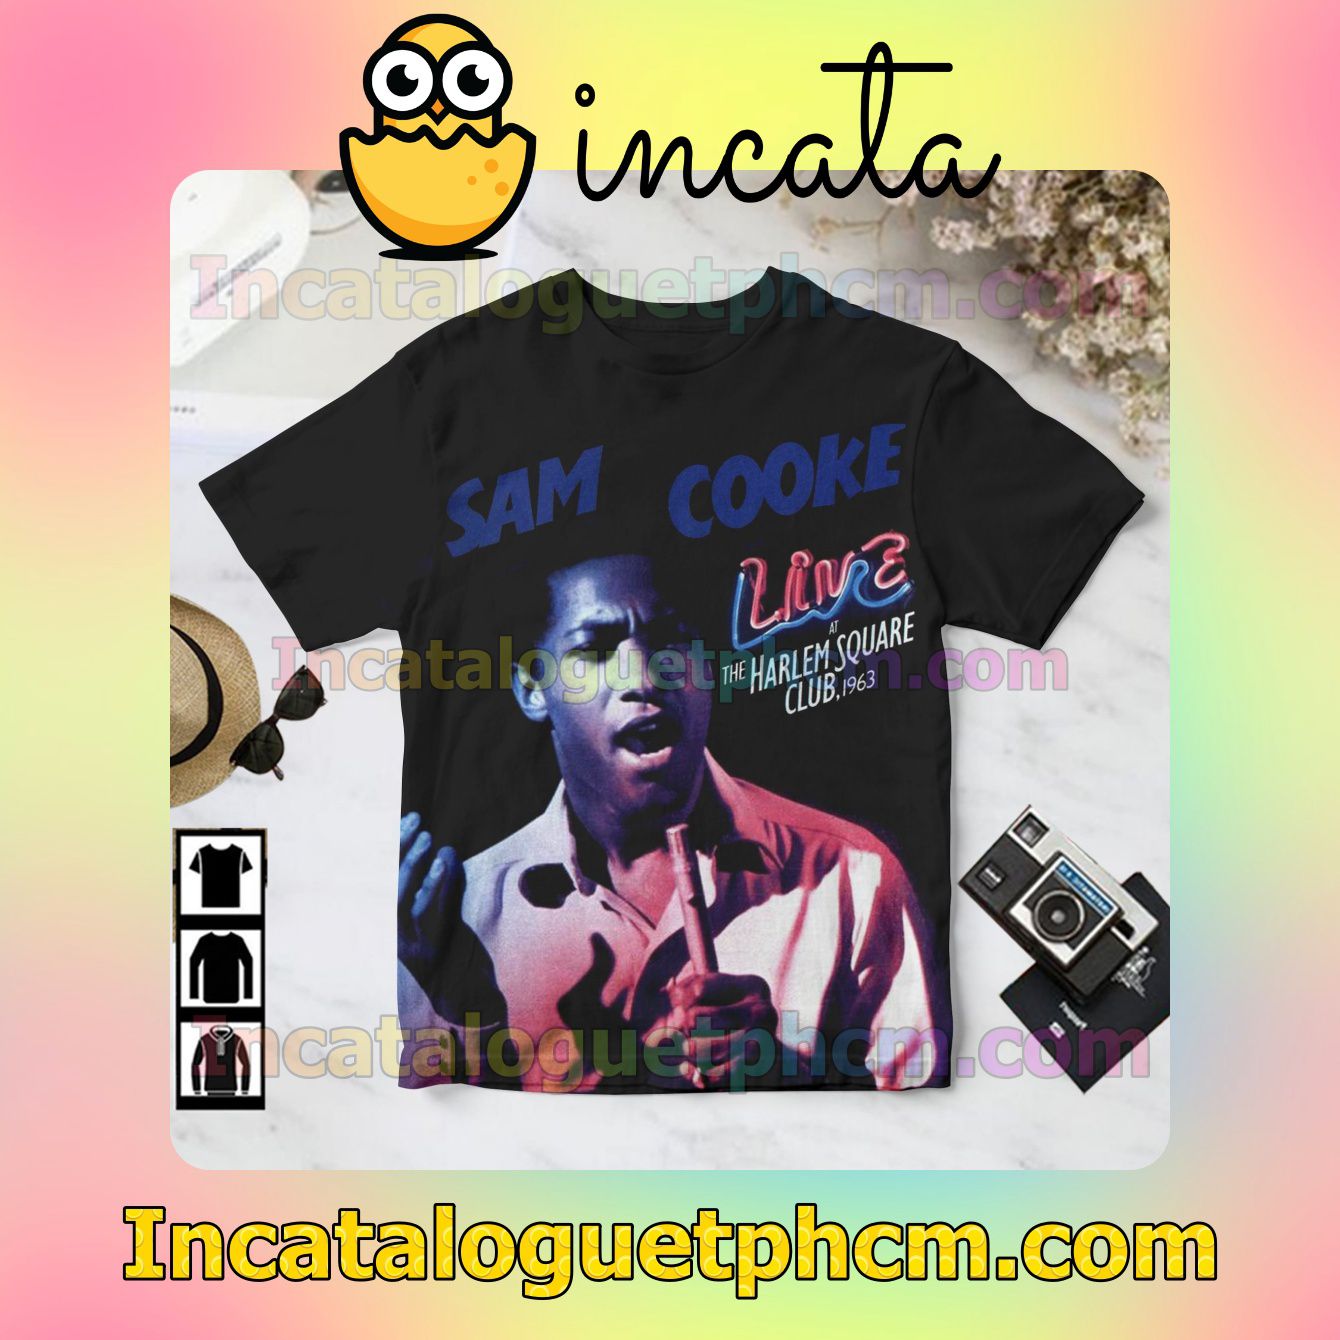 Sam Cooke Live At The Harlem Square Club 1963 Album Cover Gift Shirt